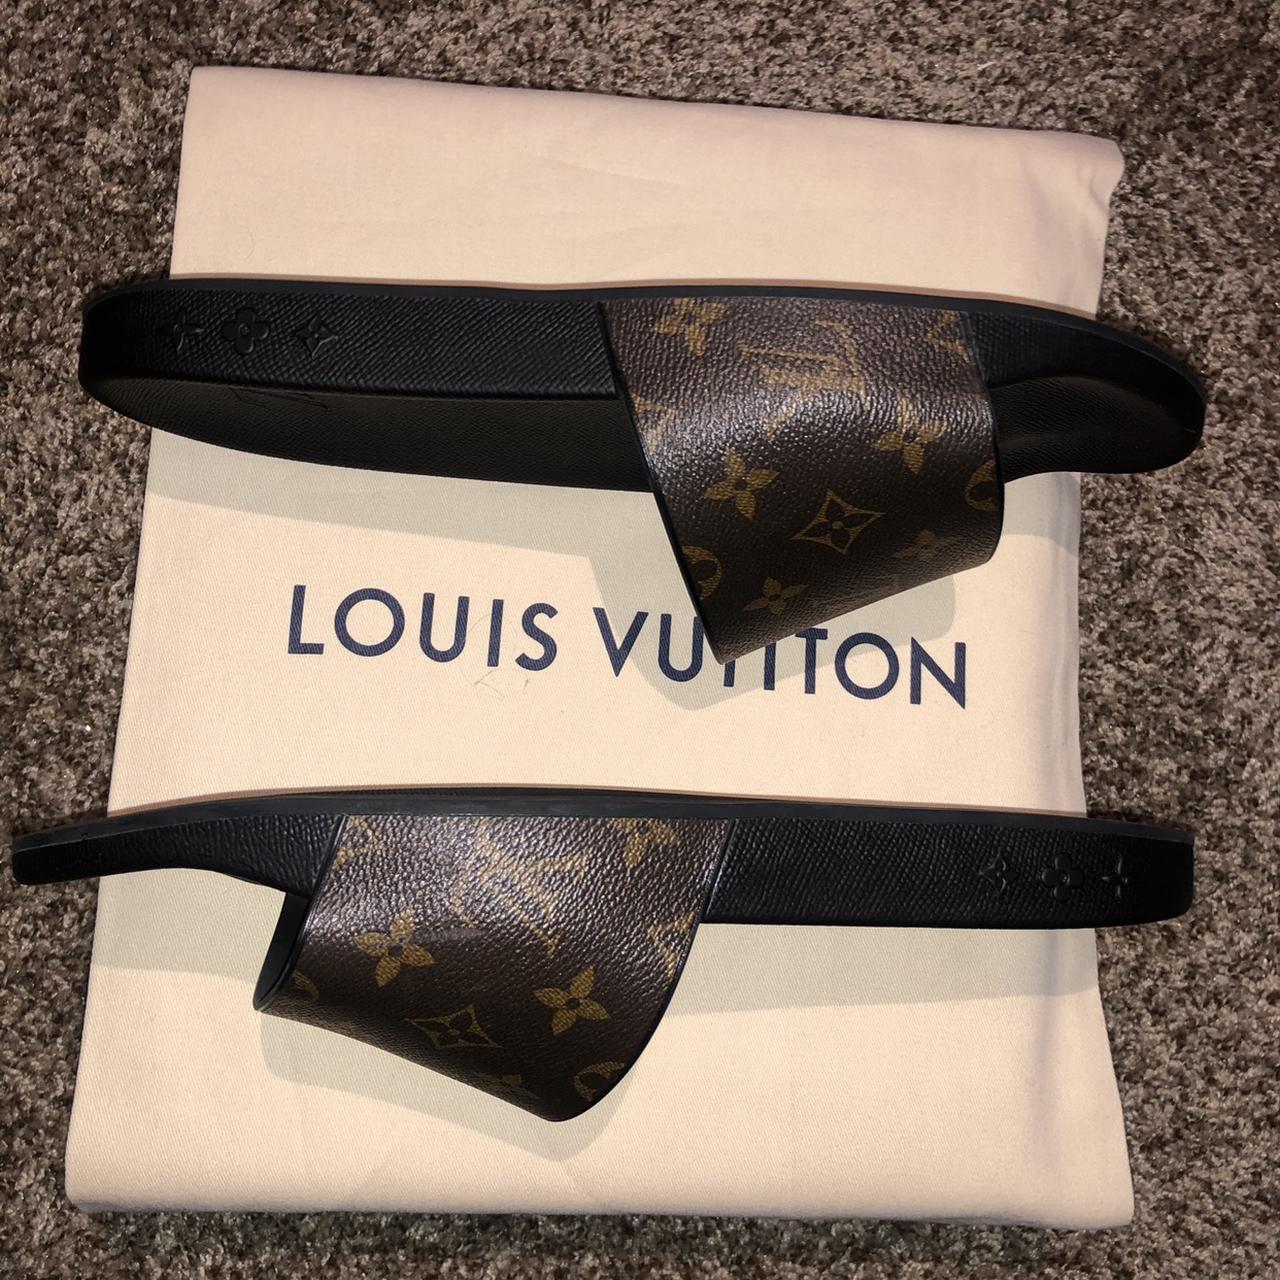 Authentic Louis Vuitton Slides (worn twice) - Depop